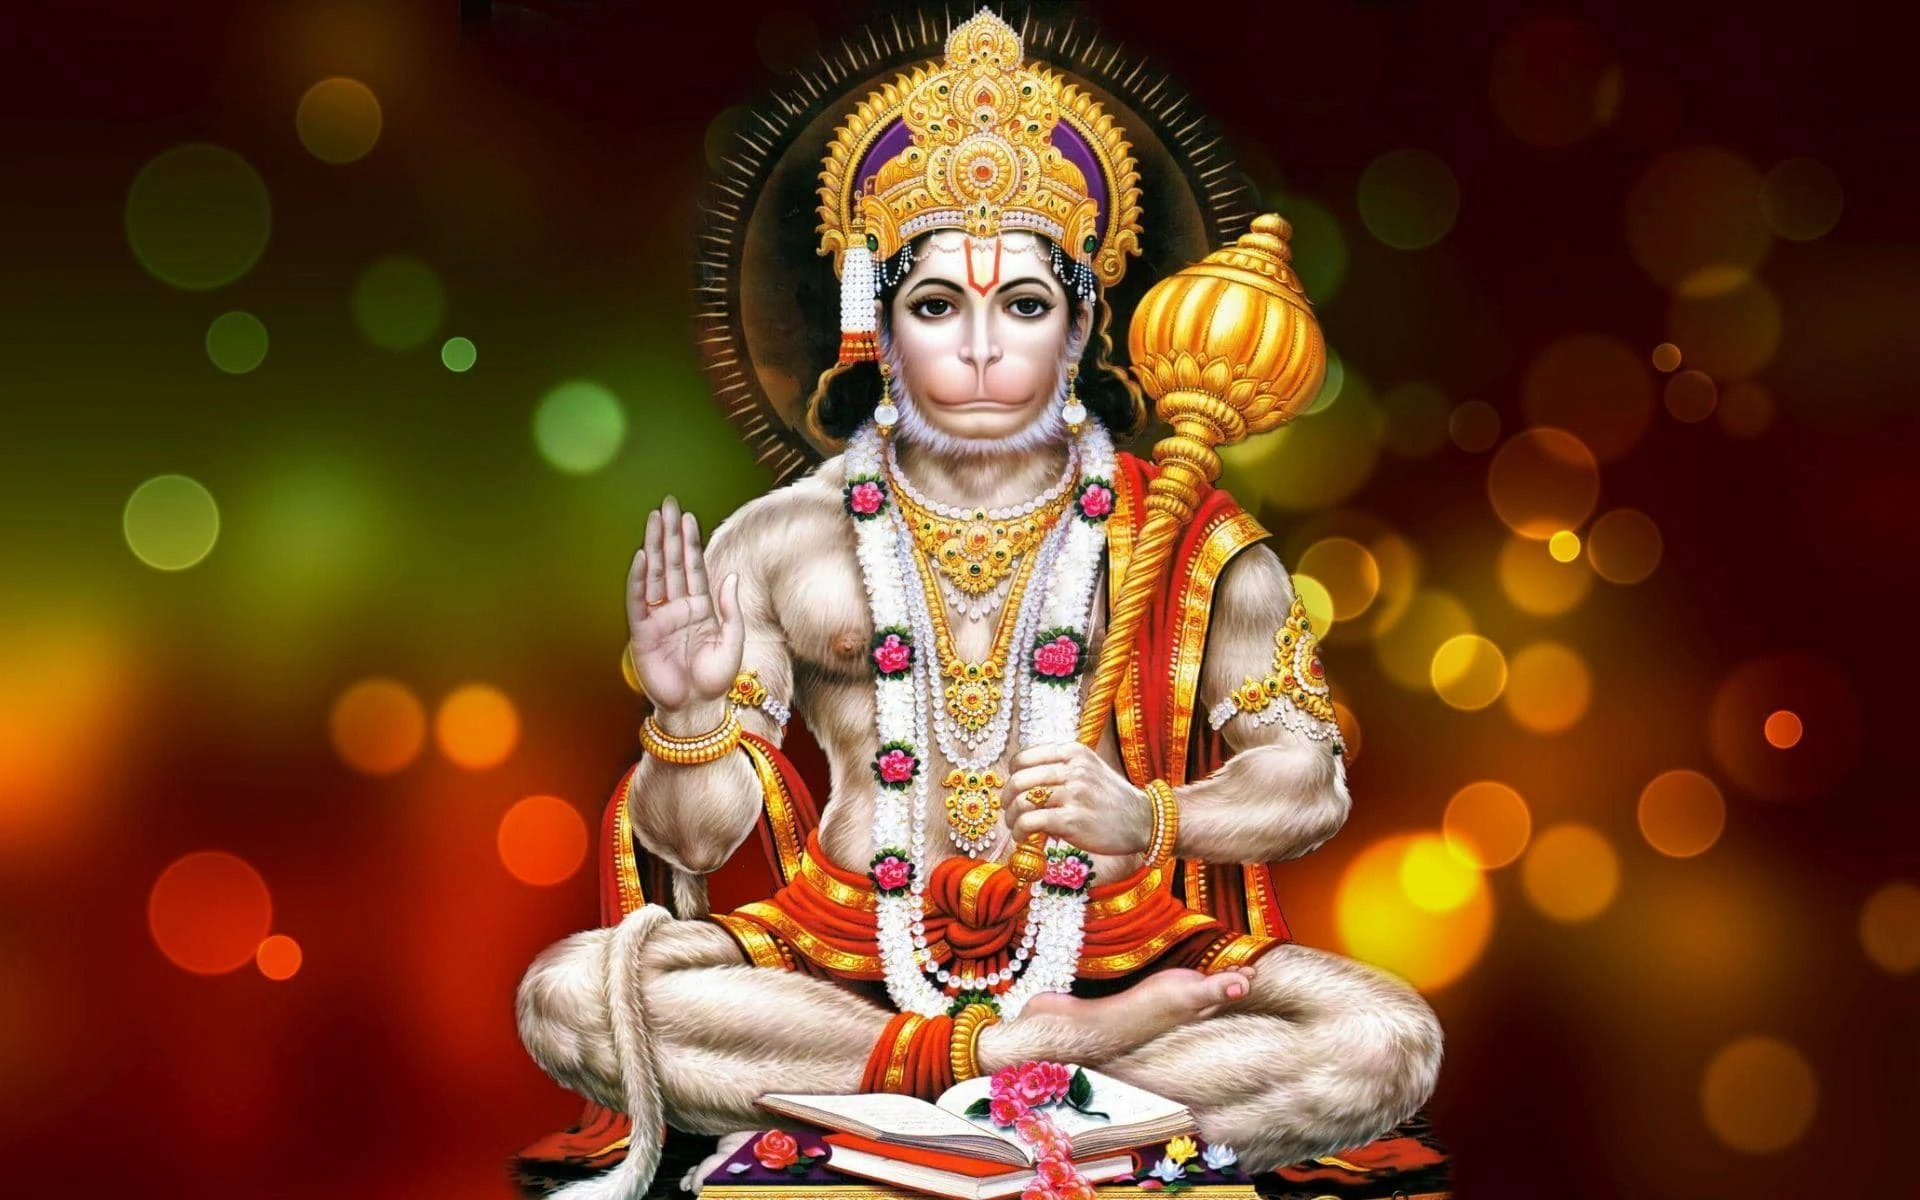 Hanuman Chalisa in Kannada